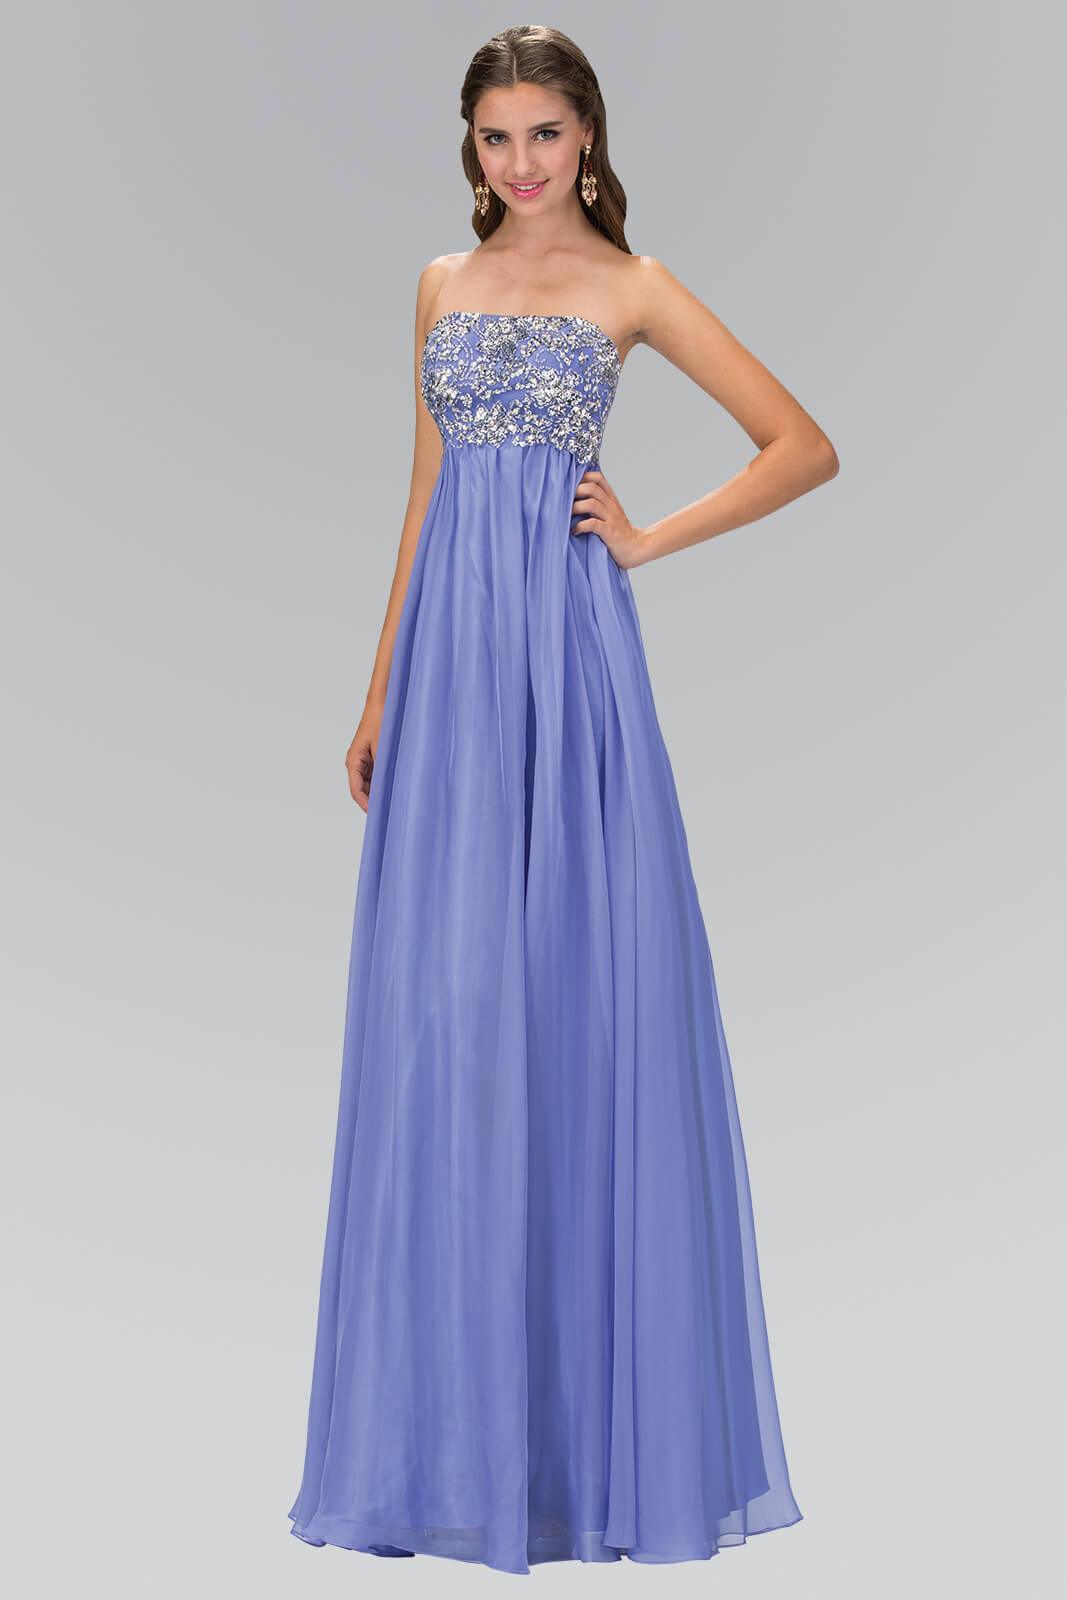 Long Strapless Chiffon Prom Formal Dress - The Dress Outlet Elizabeth K